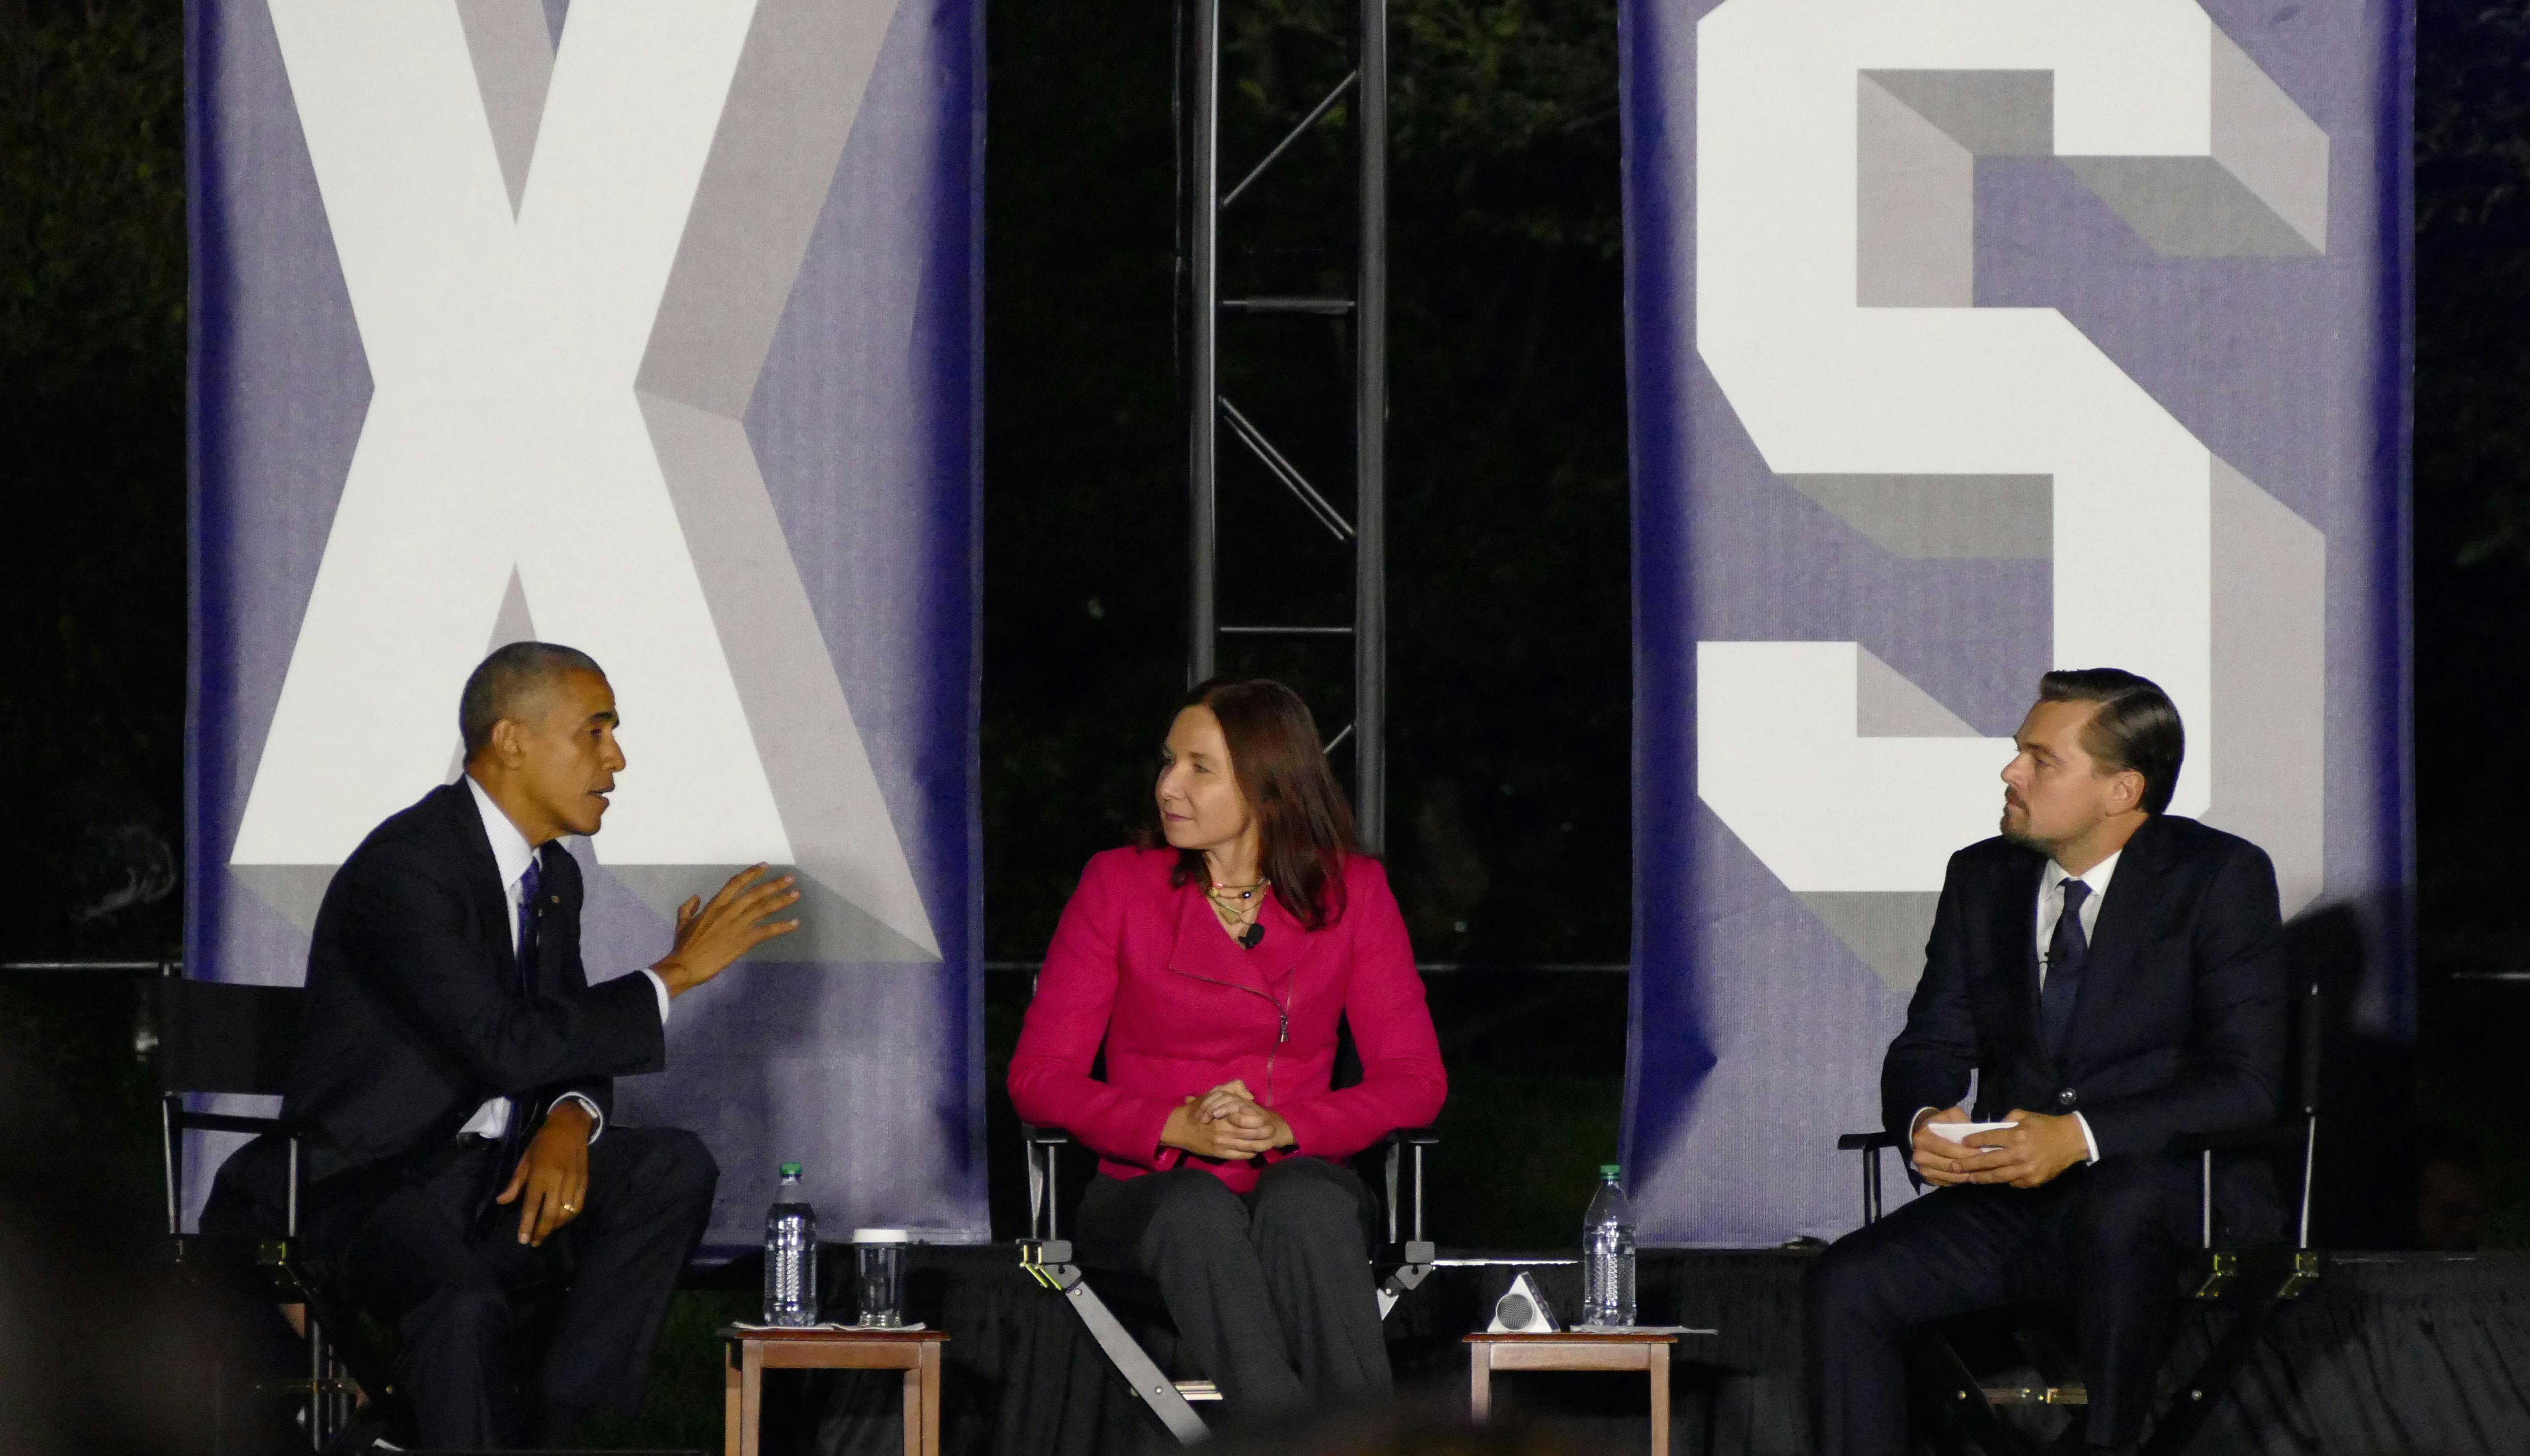 President Obama, Dr. Katharine Hayhoe, and Leonardo DiCaprio